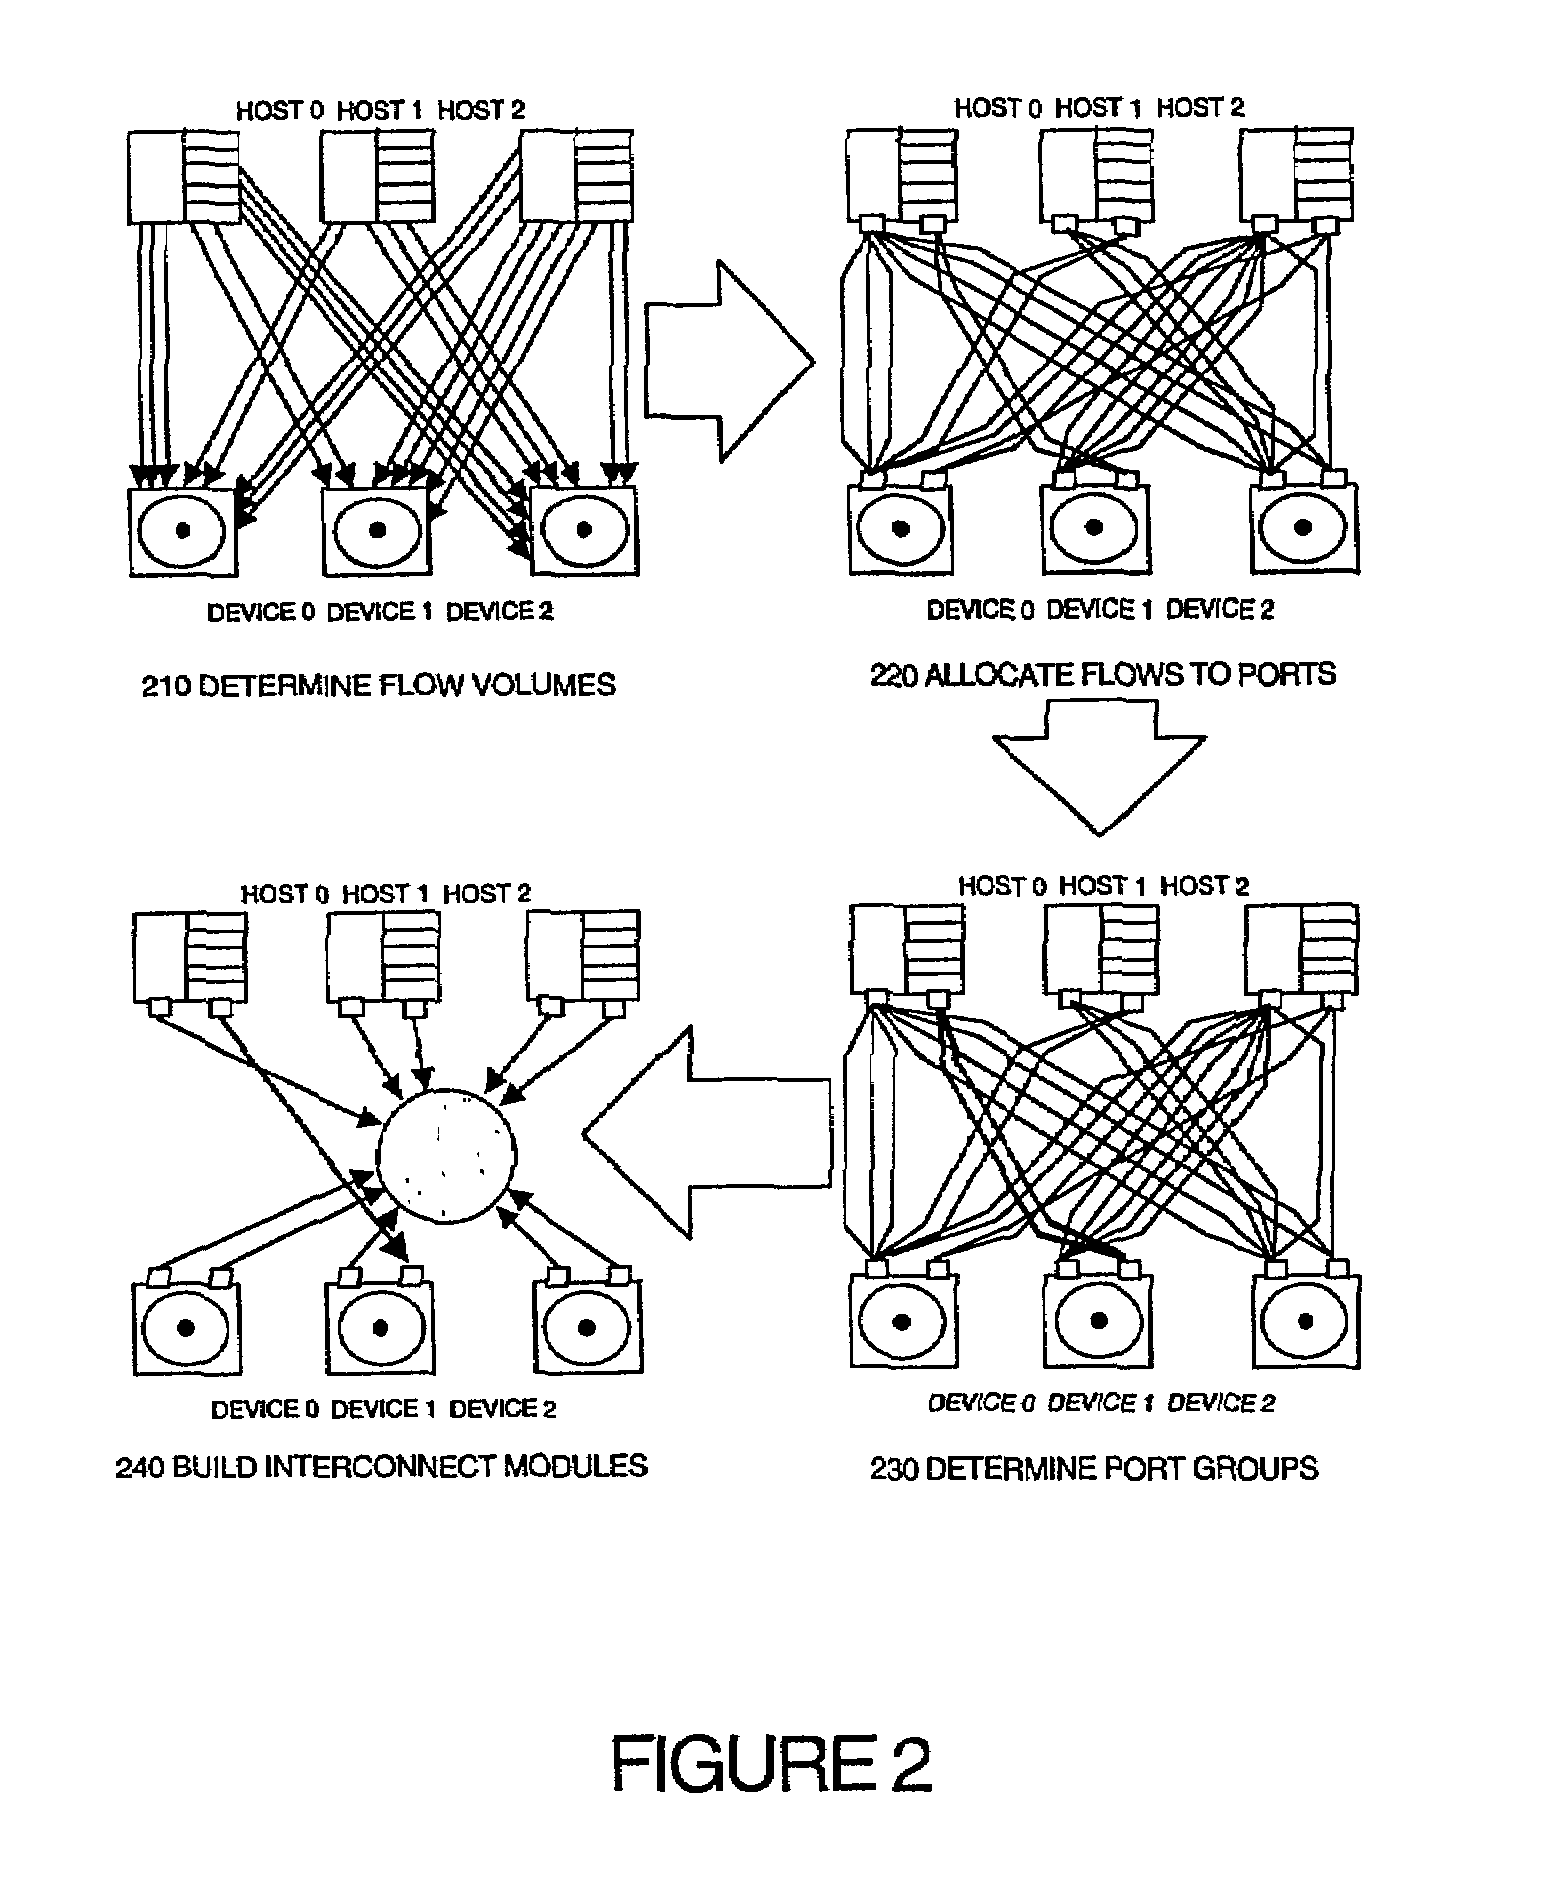 Module-building method for designing interconnect fabrics